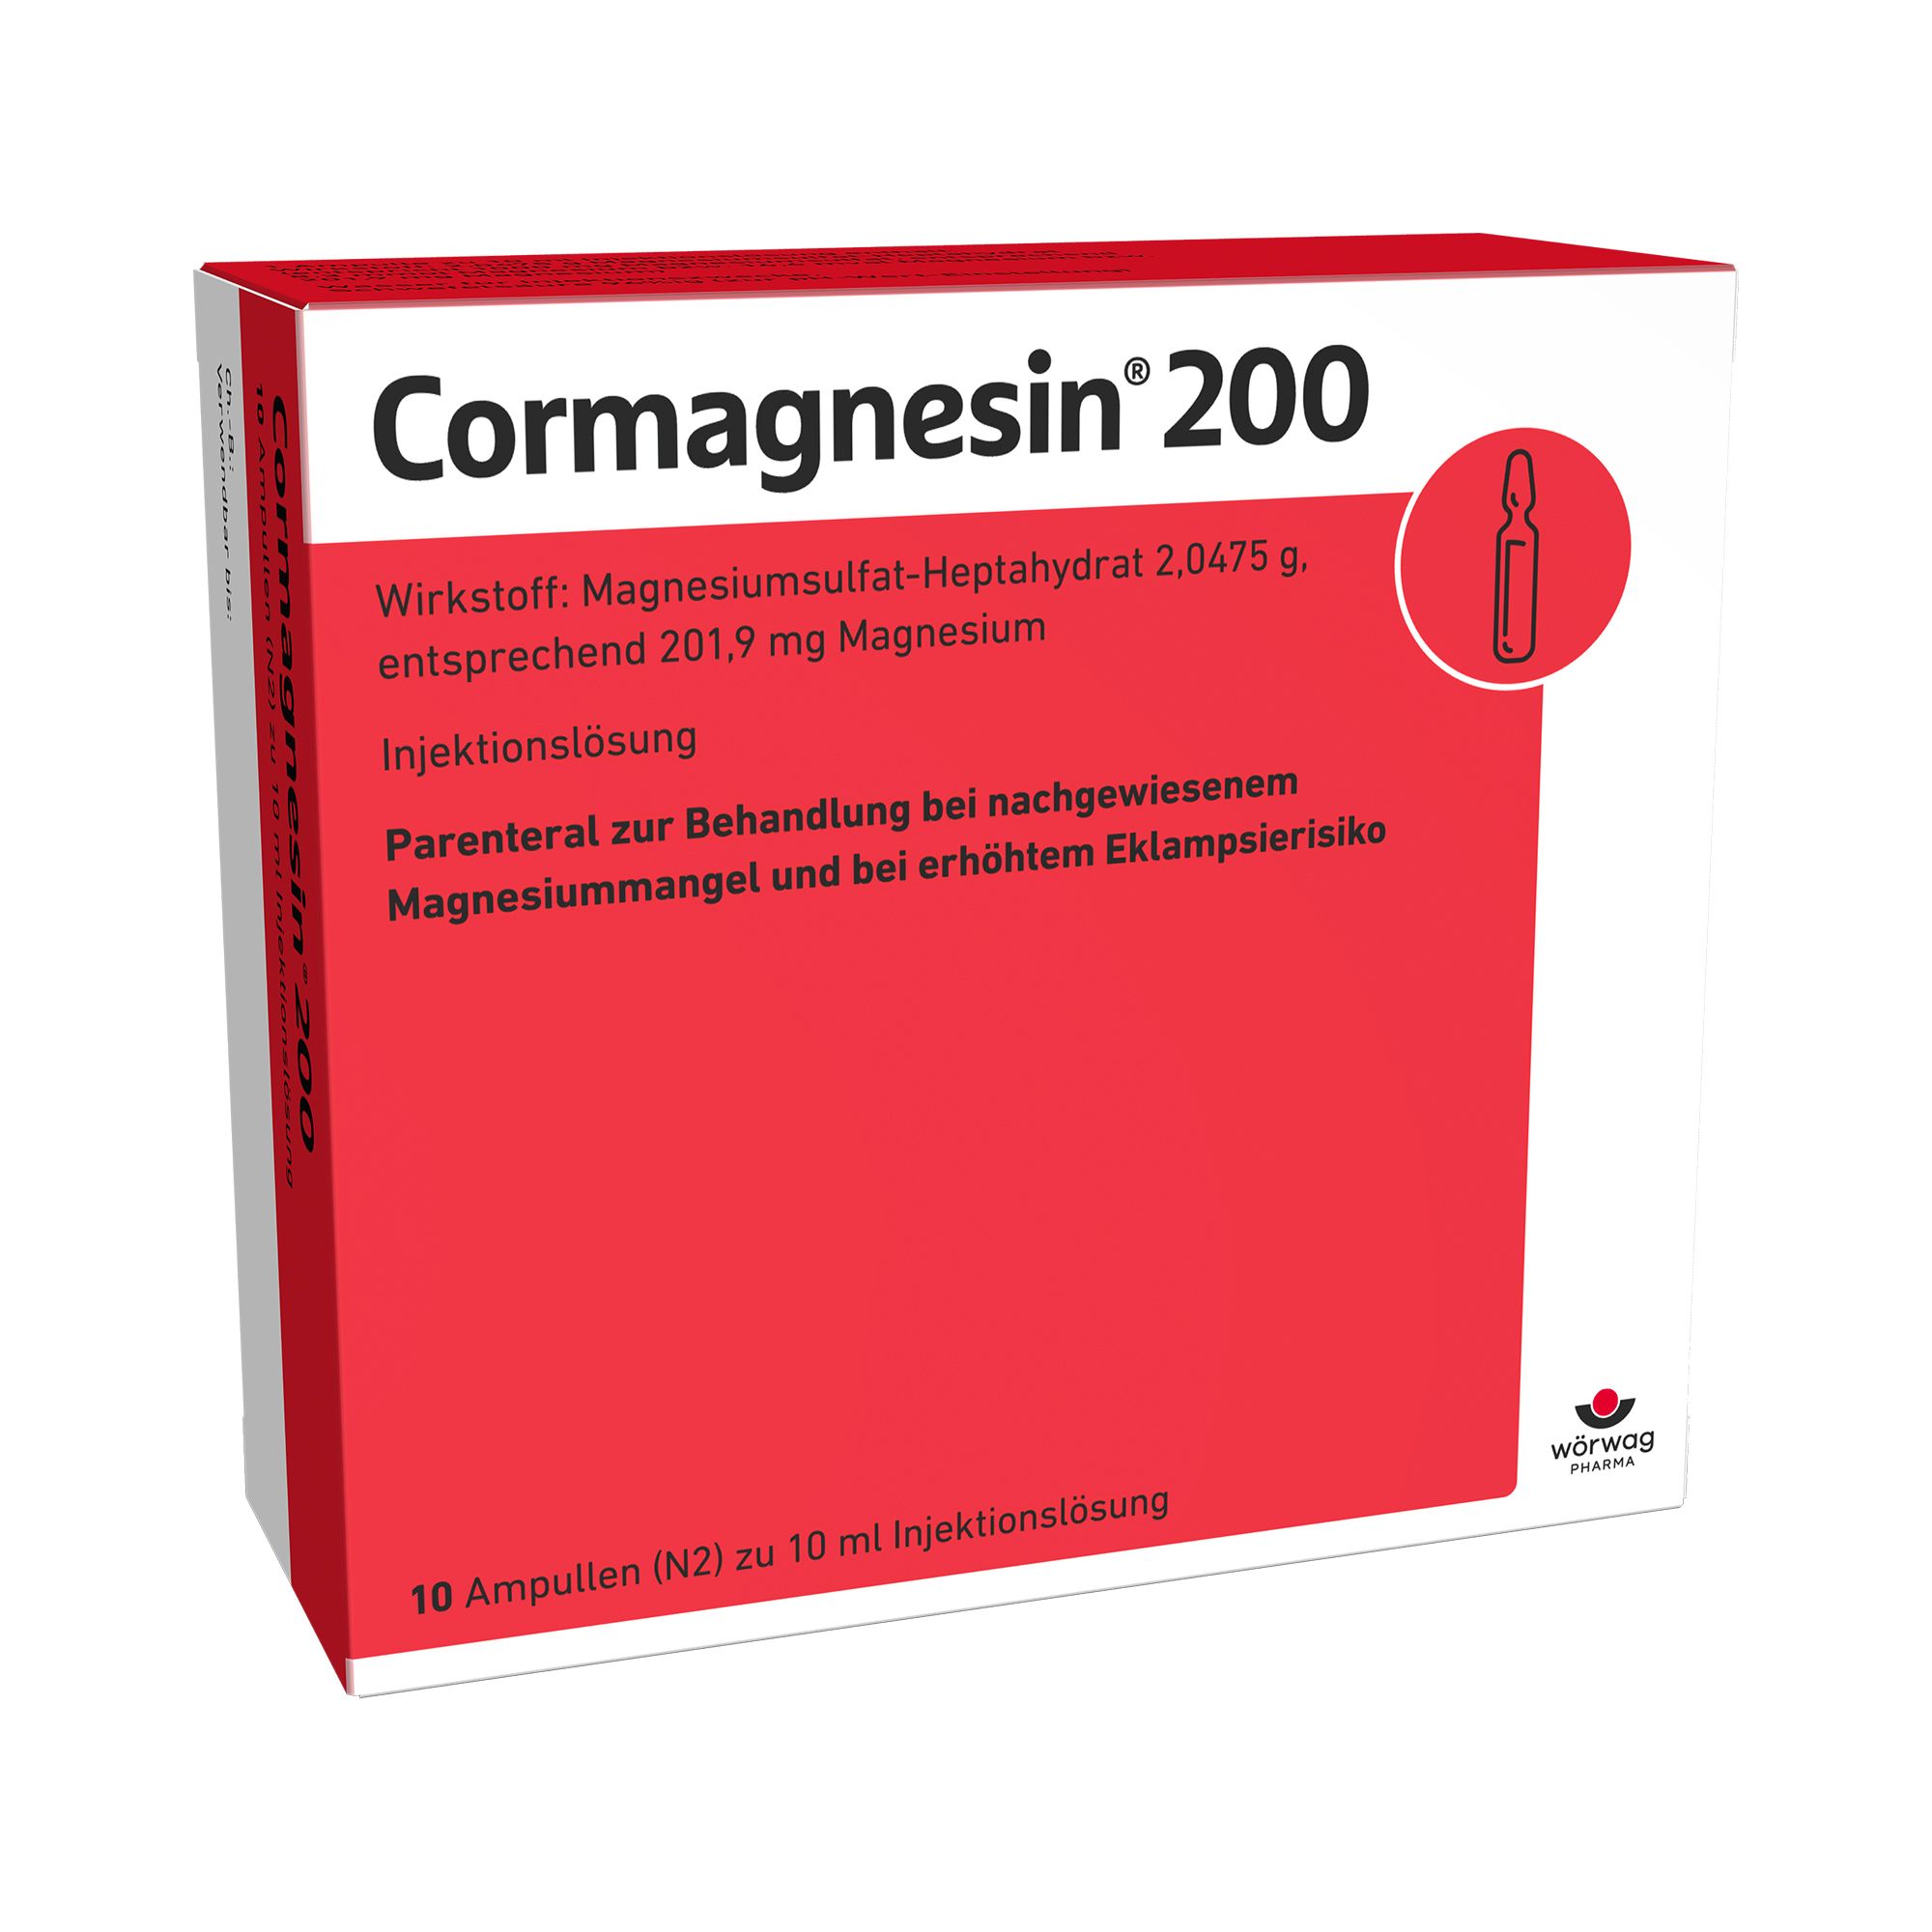 Cormagnesin® 200